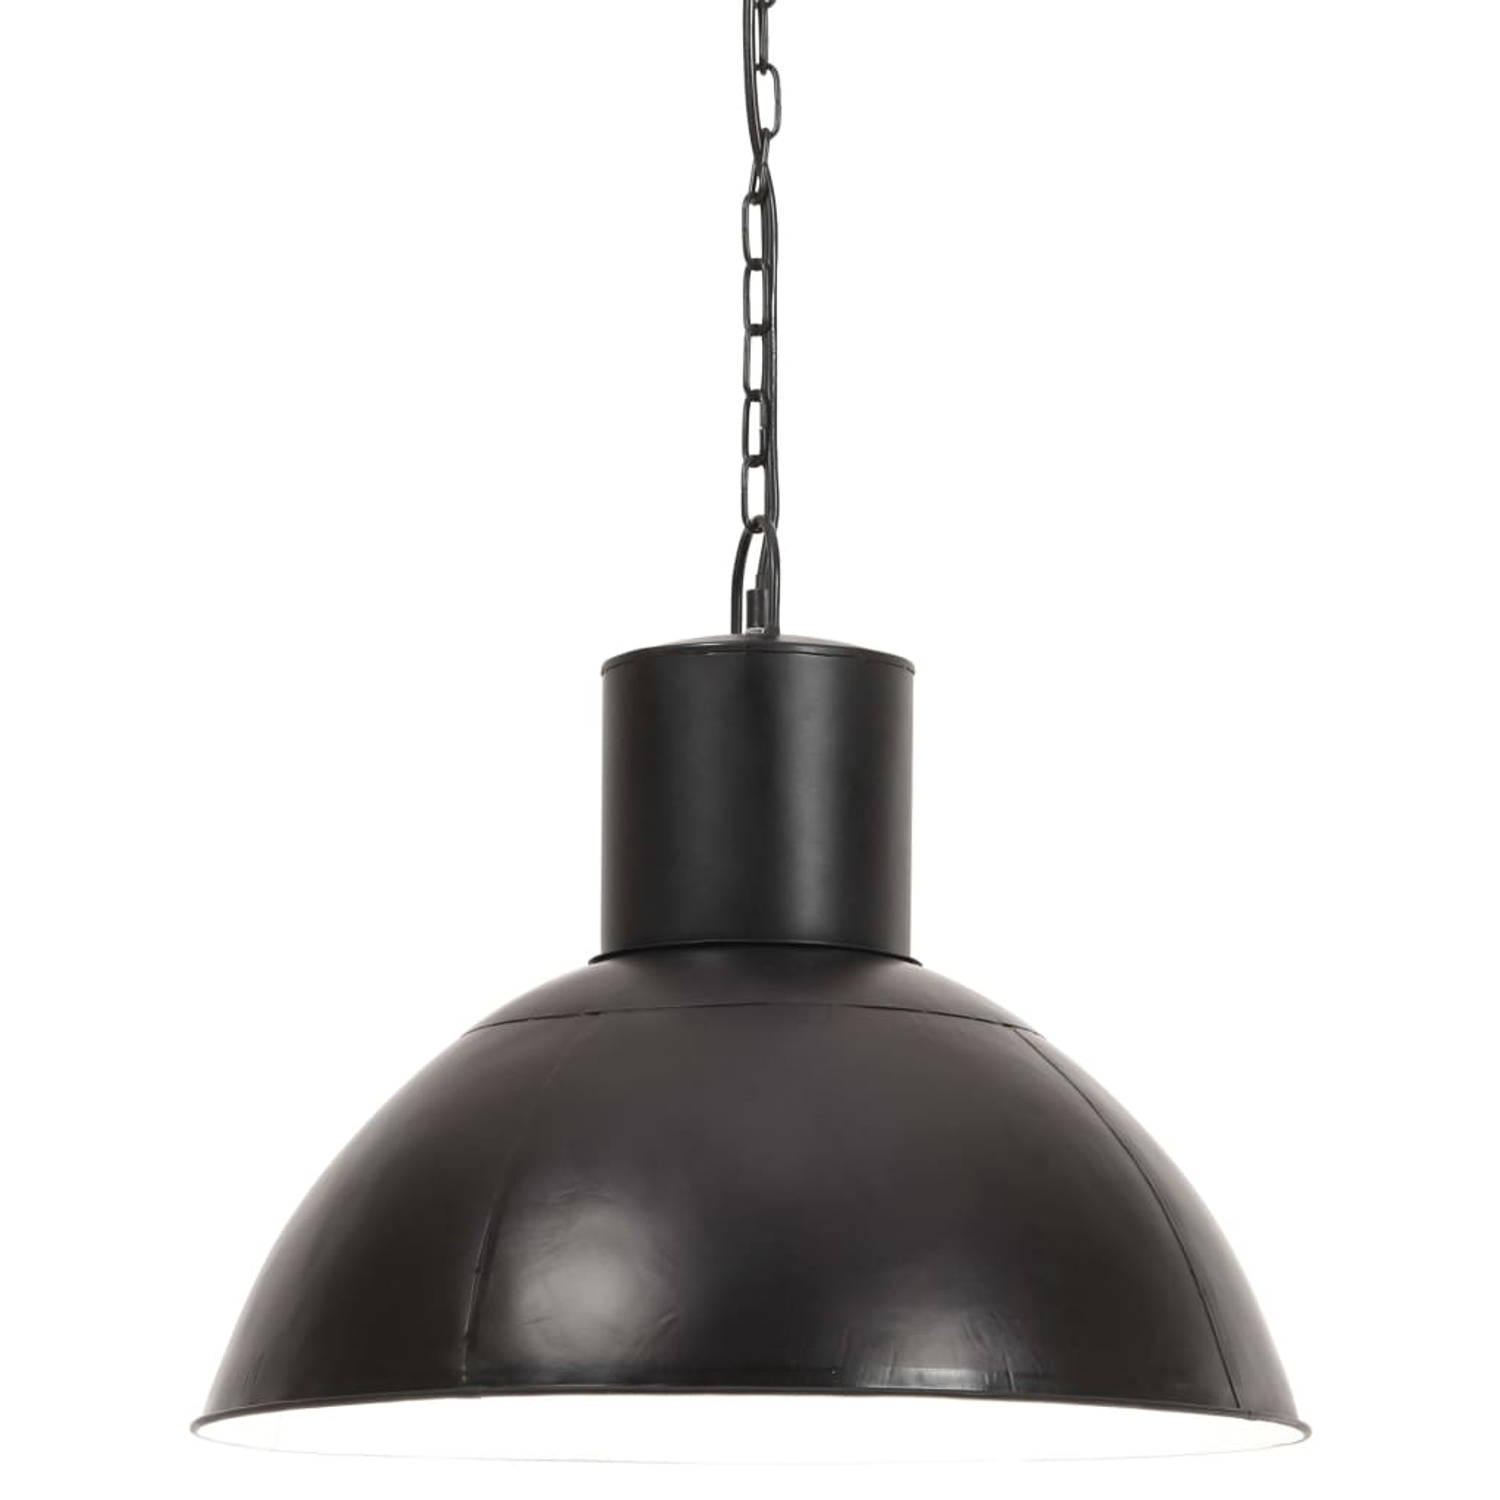 The Living Store Hanglamp - Industriële Stijl - IJzer - Zwart - 48x41 cm - E27 fitting